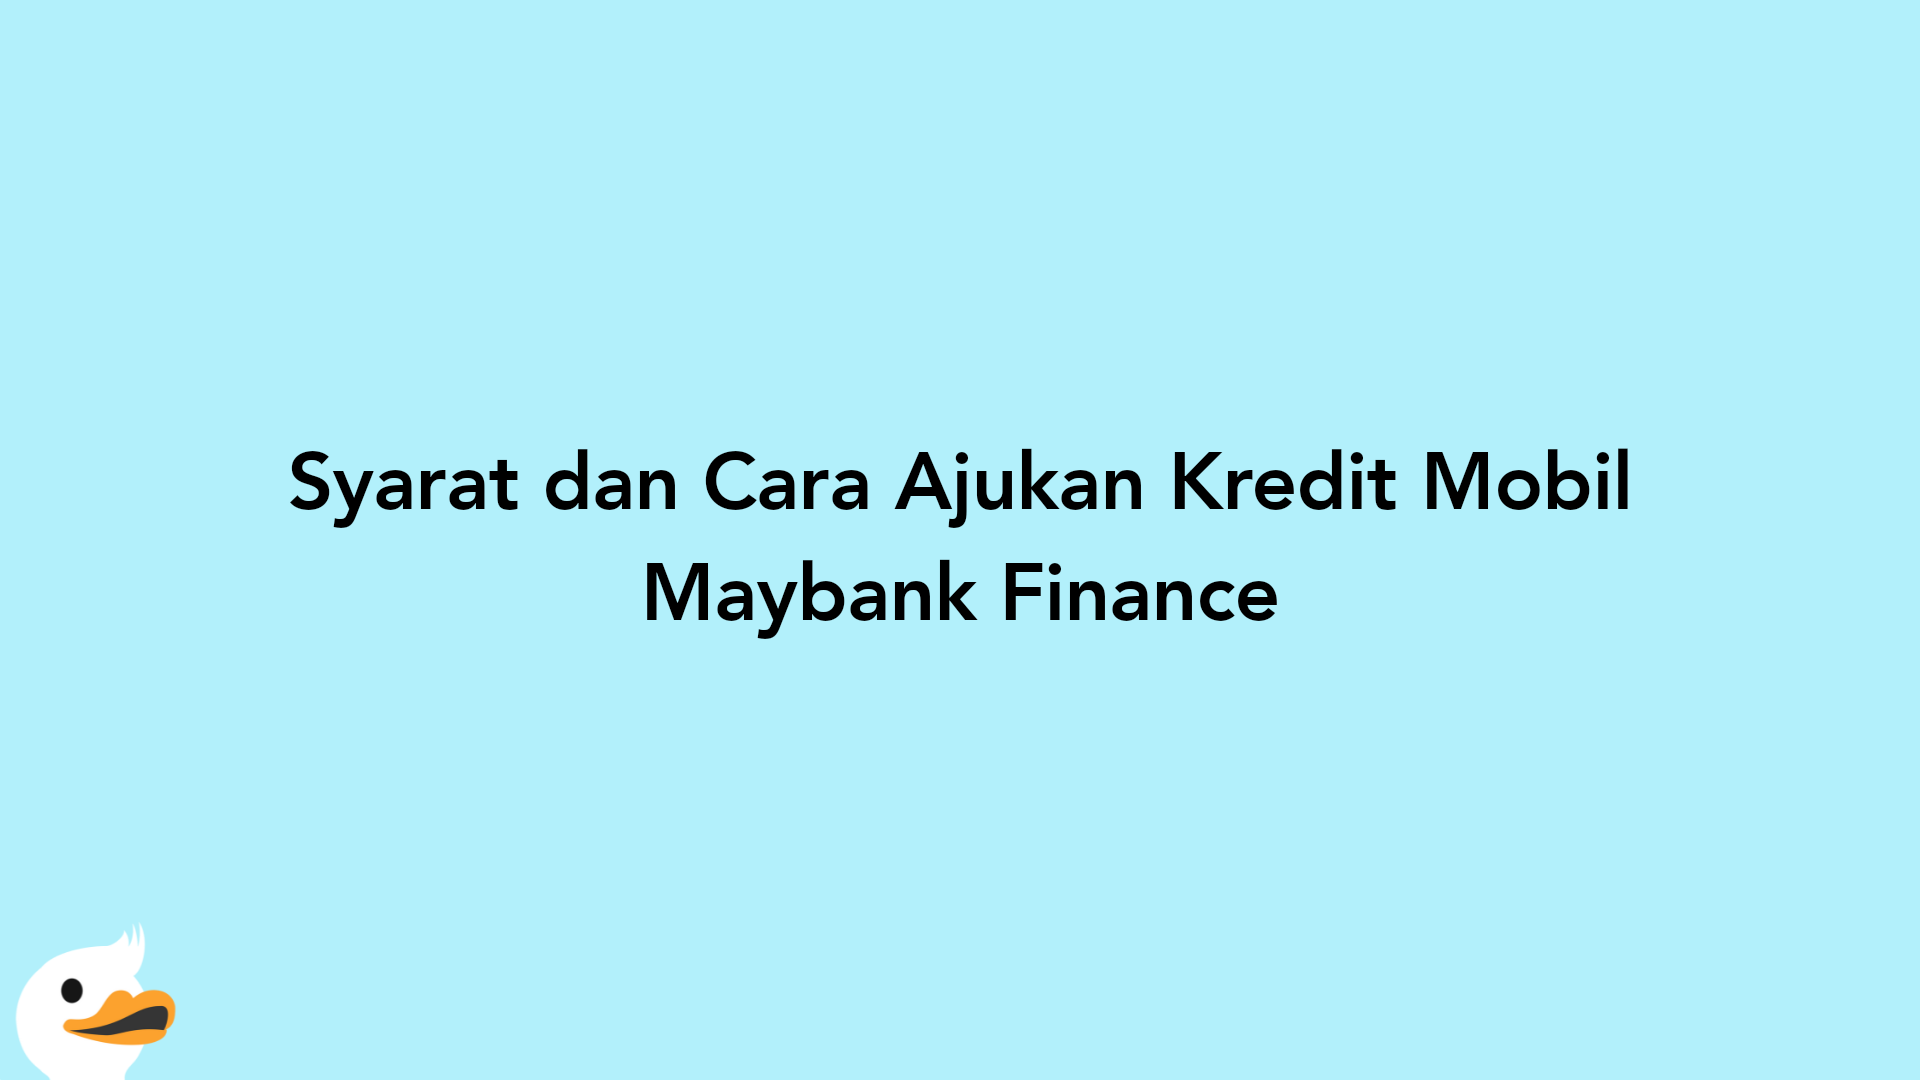 Syarat dan Cara Ajukan Kredit Mobil Maybank Finance